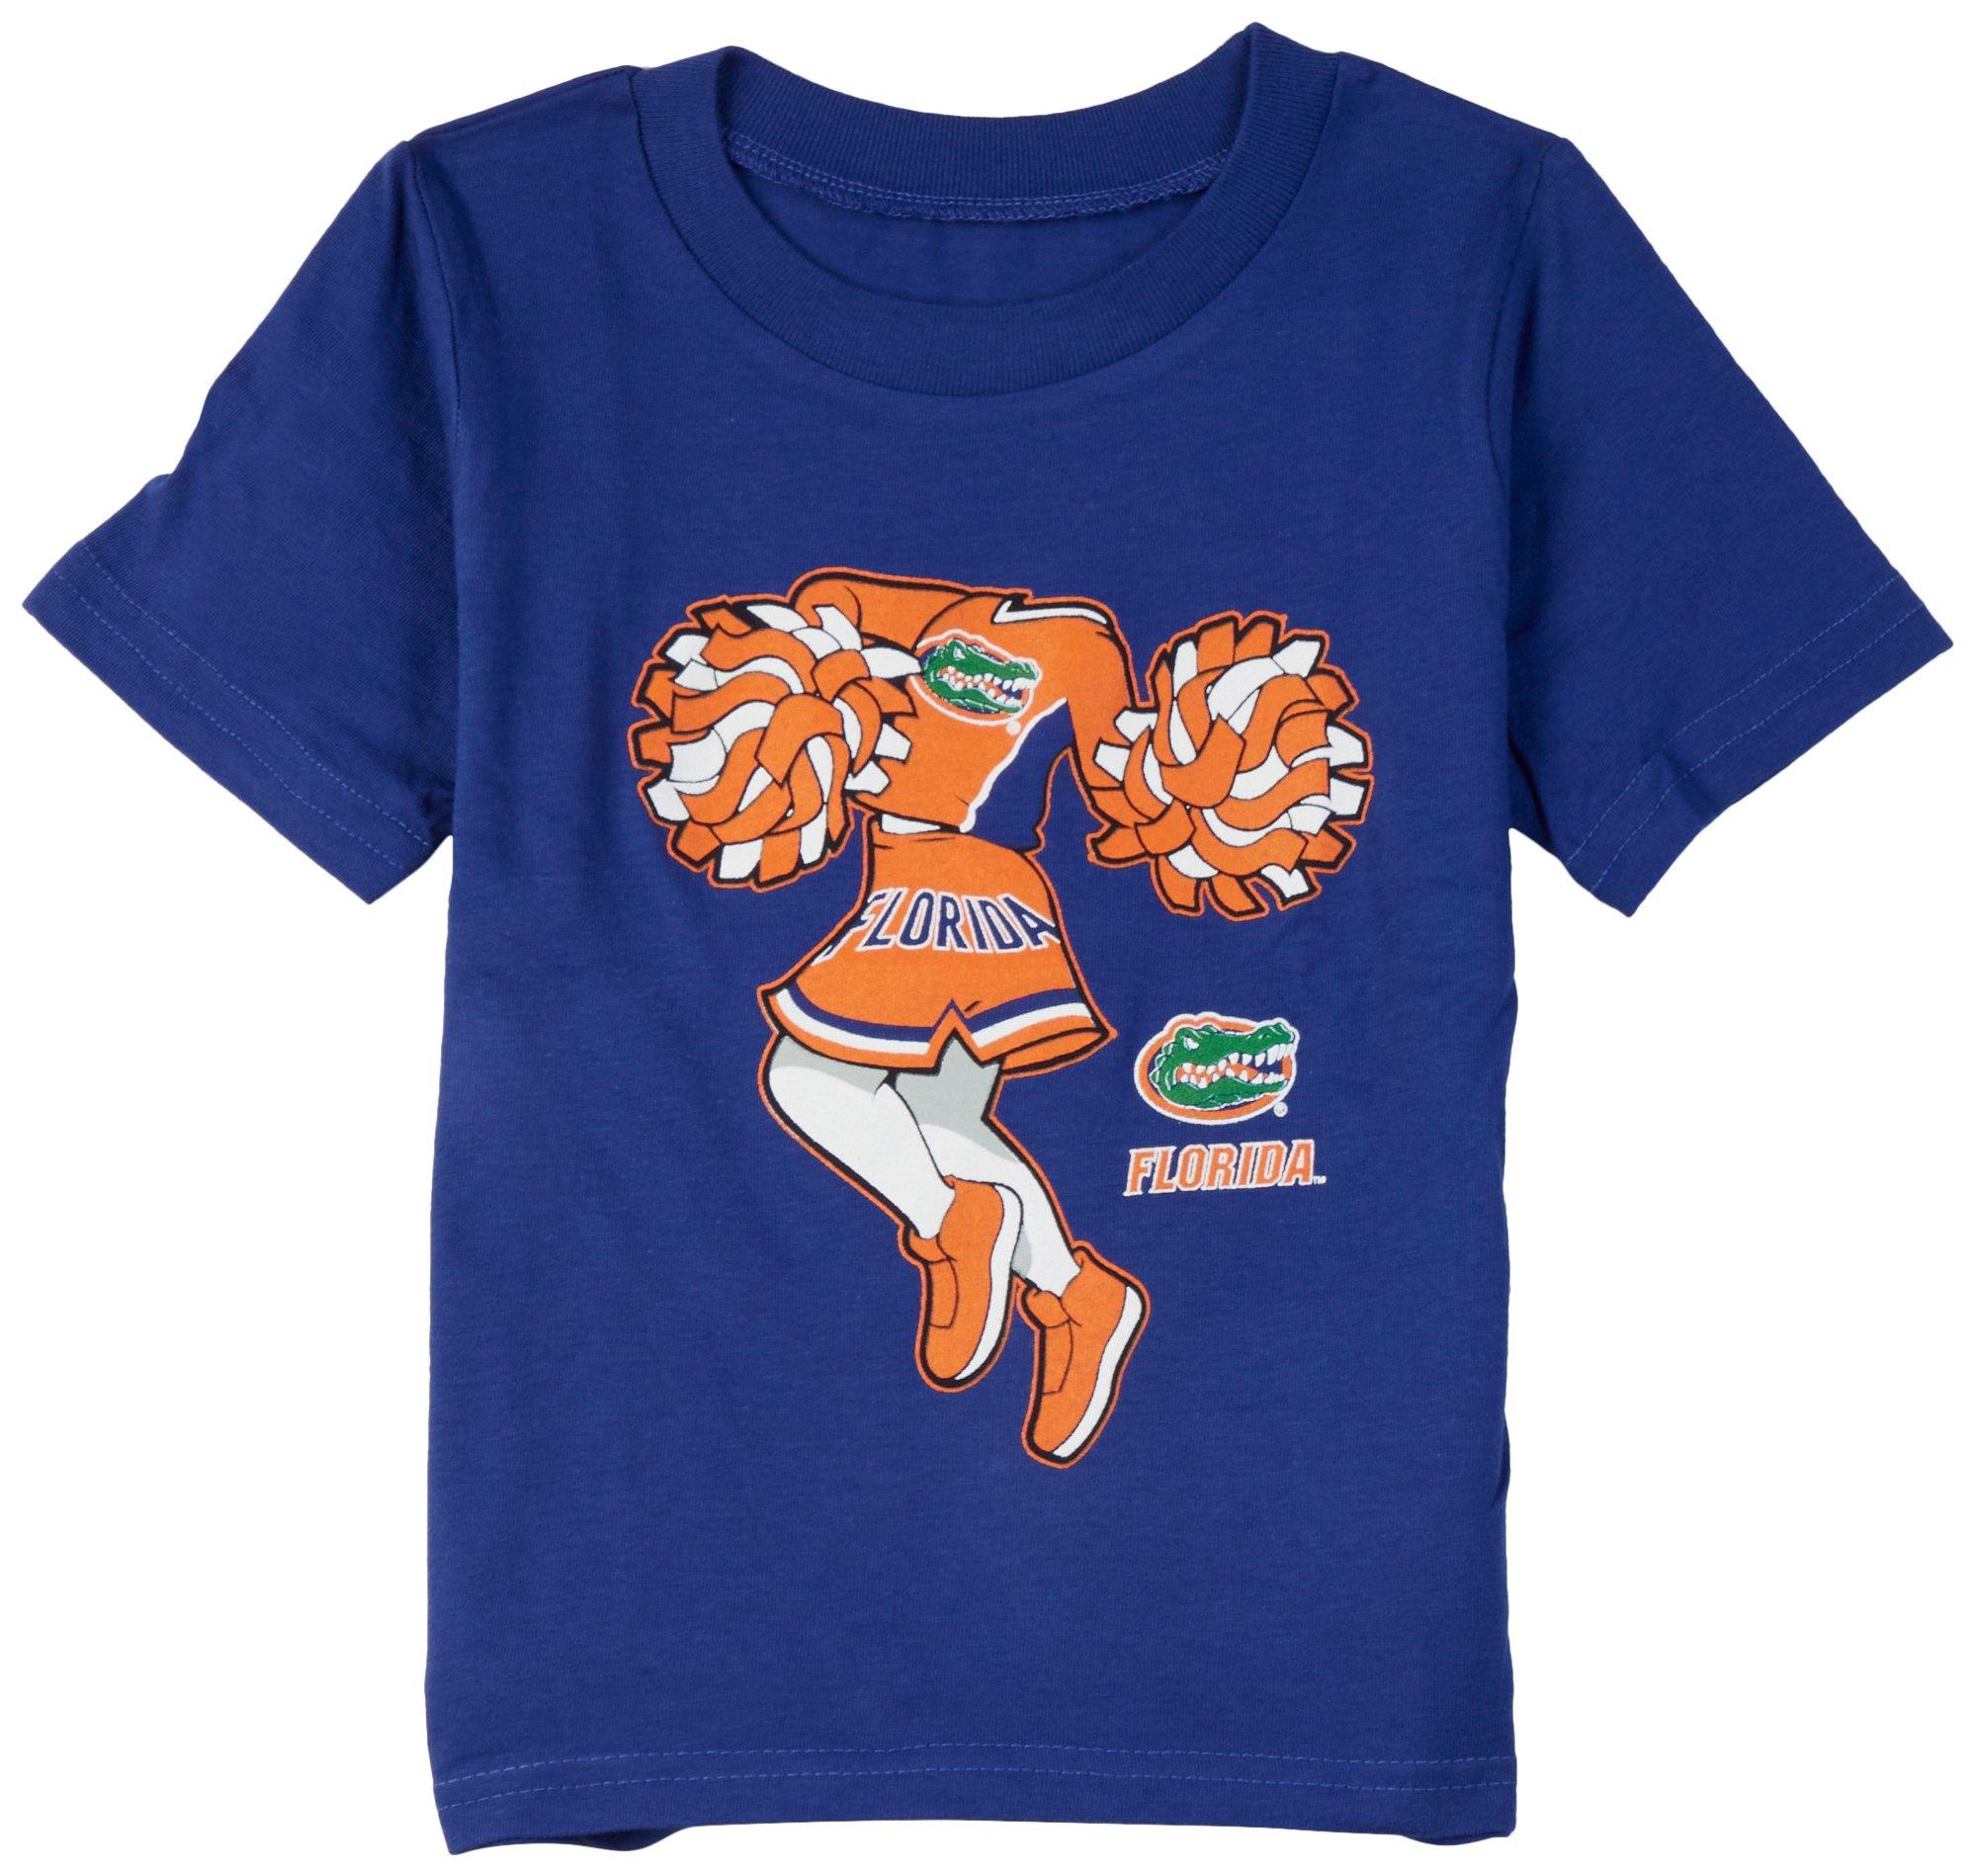 Florida Gators Toddlers Cheerleader T Shirt